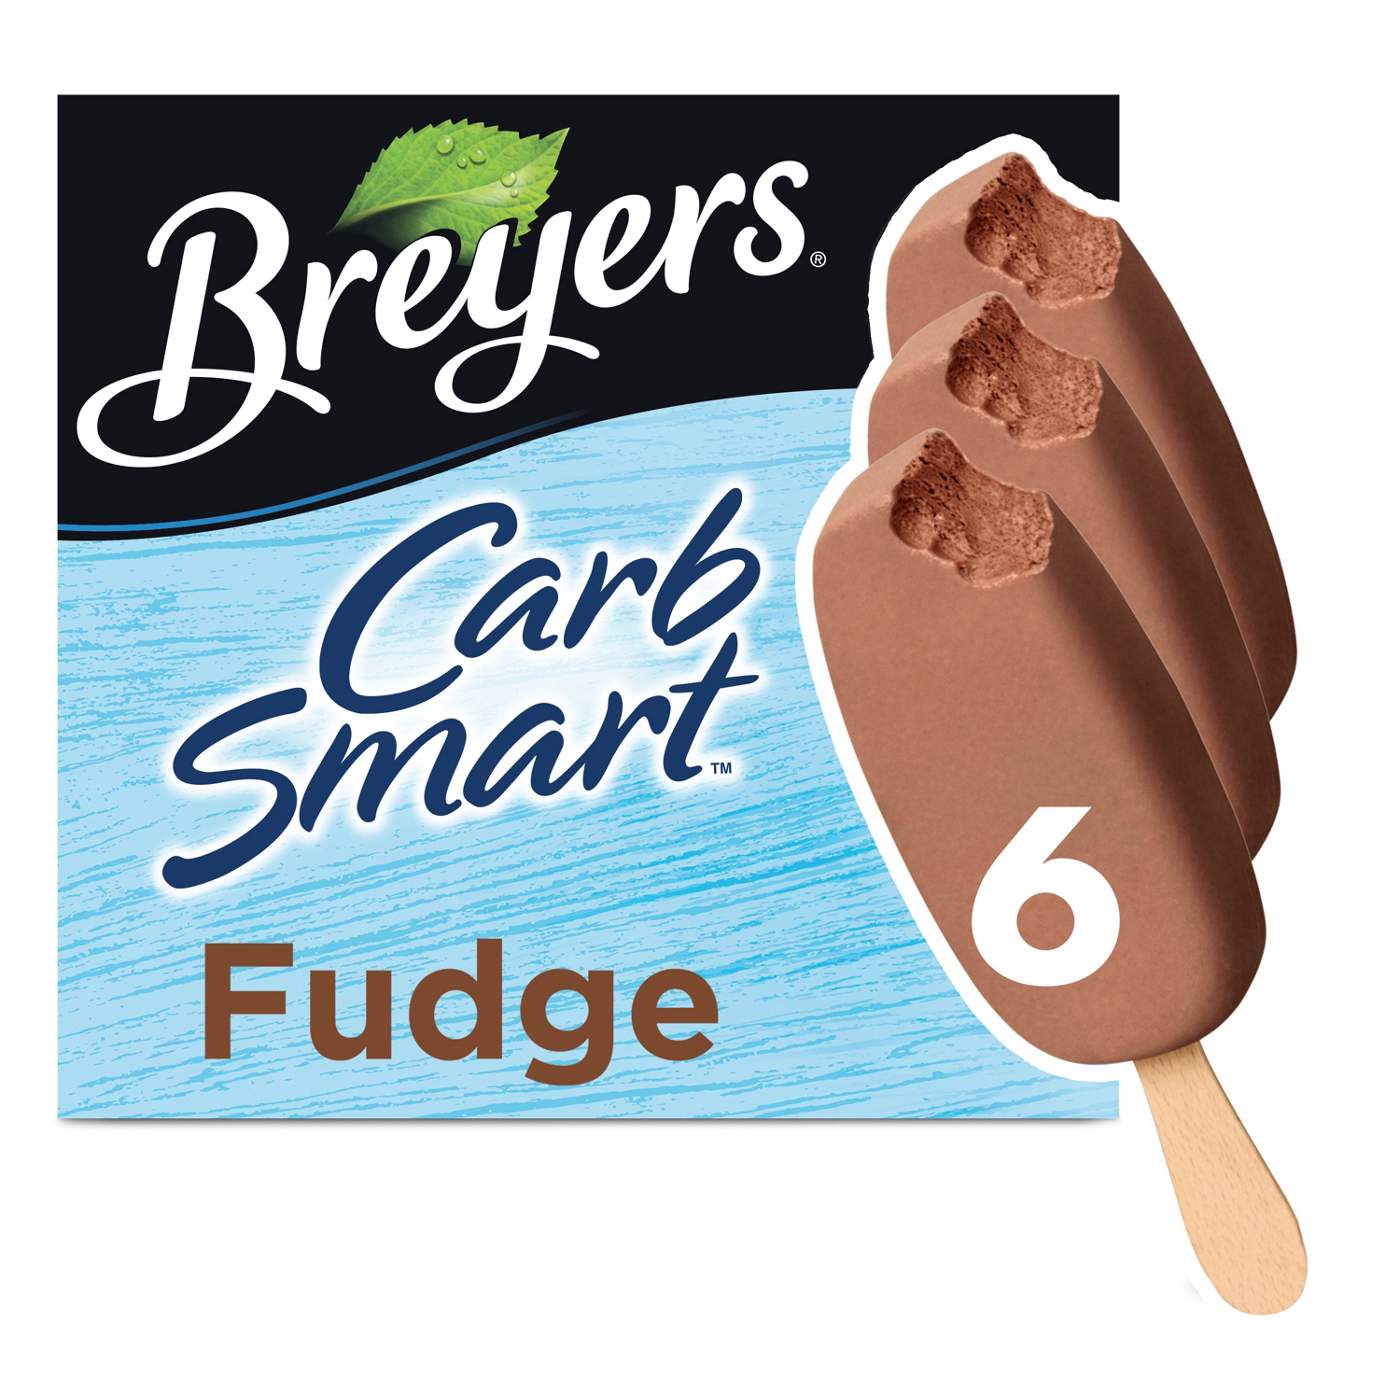 Breyers Carb Smart Fudge Bars; image 2 of 2